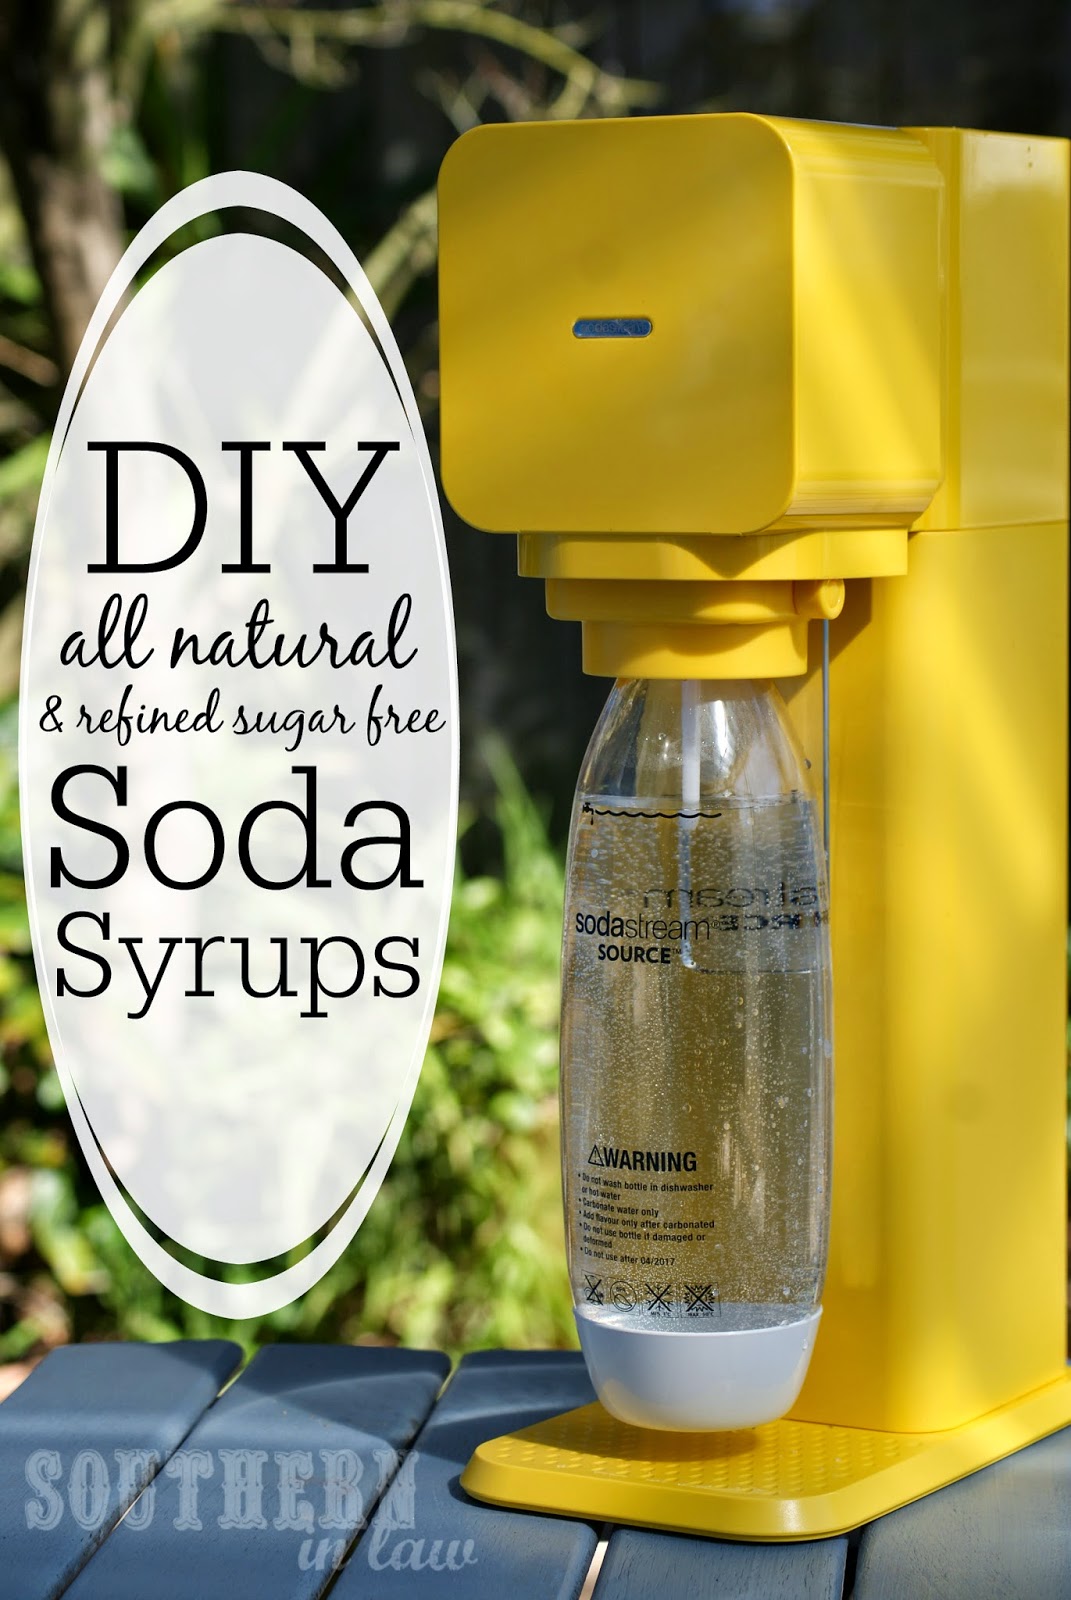 DIY Healthy Soda Syrup Recipe - low fat, gluten free, sugar free, all natural